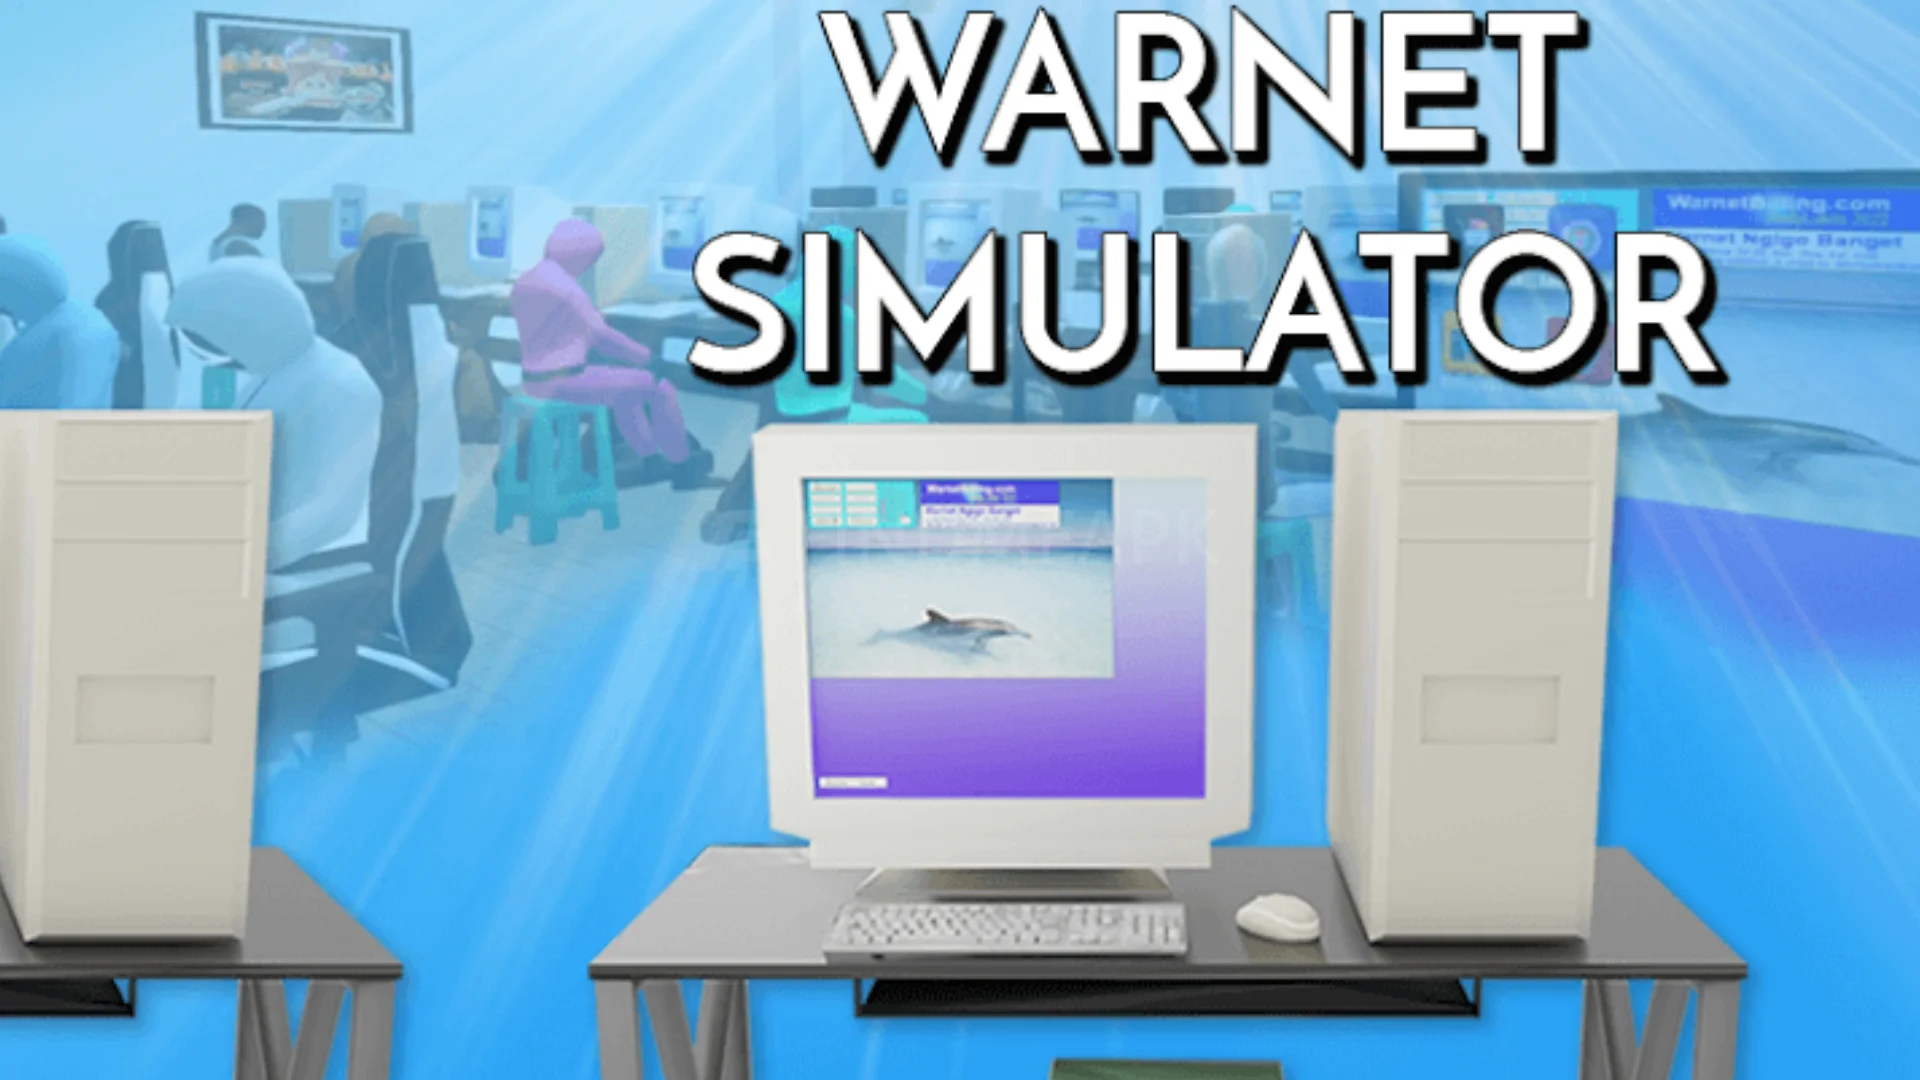 Warnet Simulator feature image